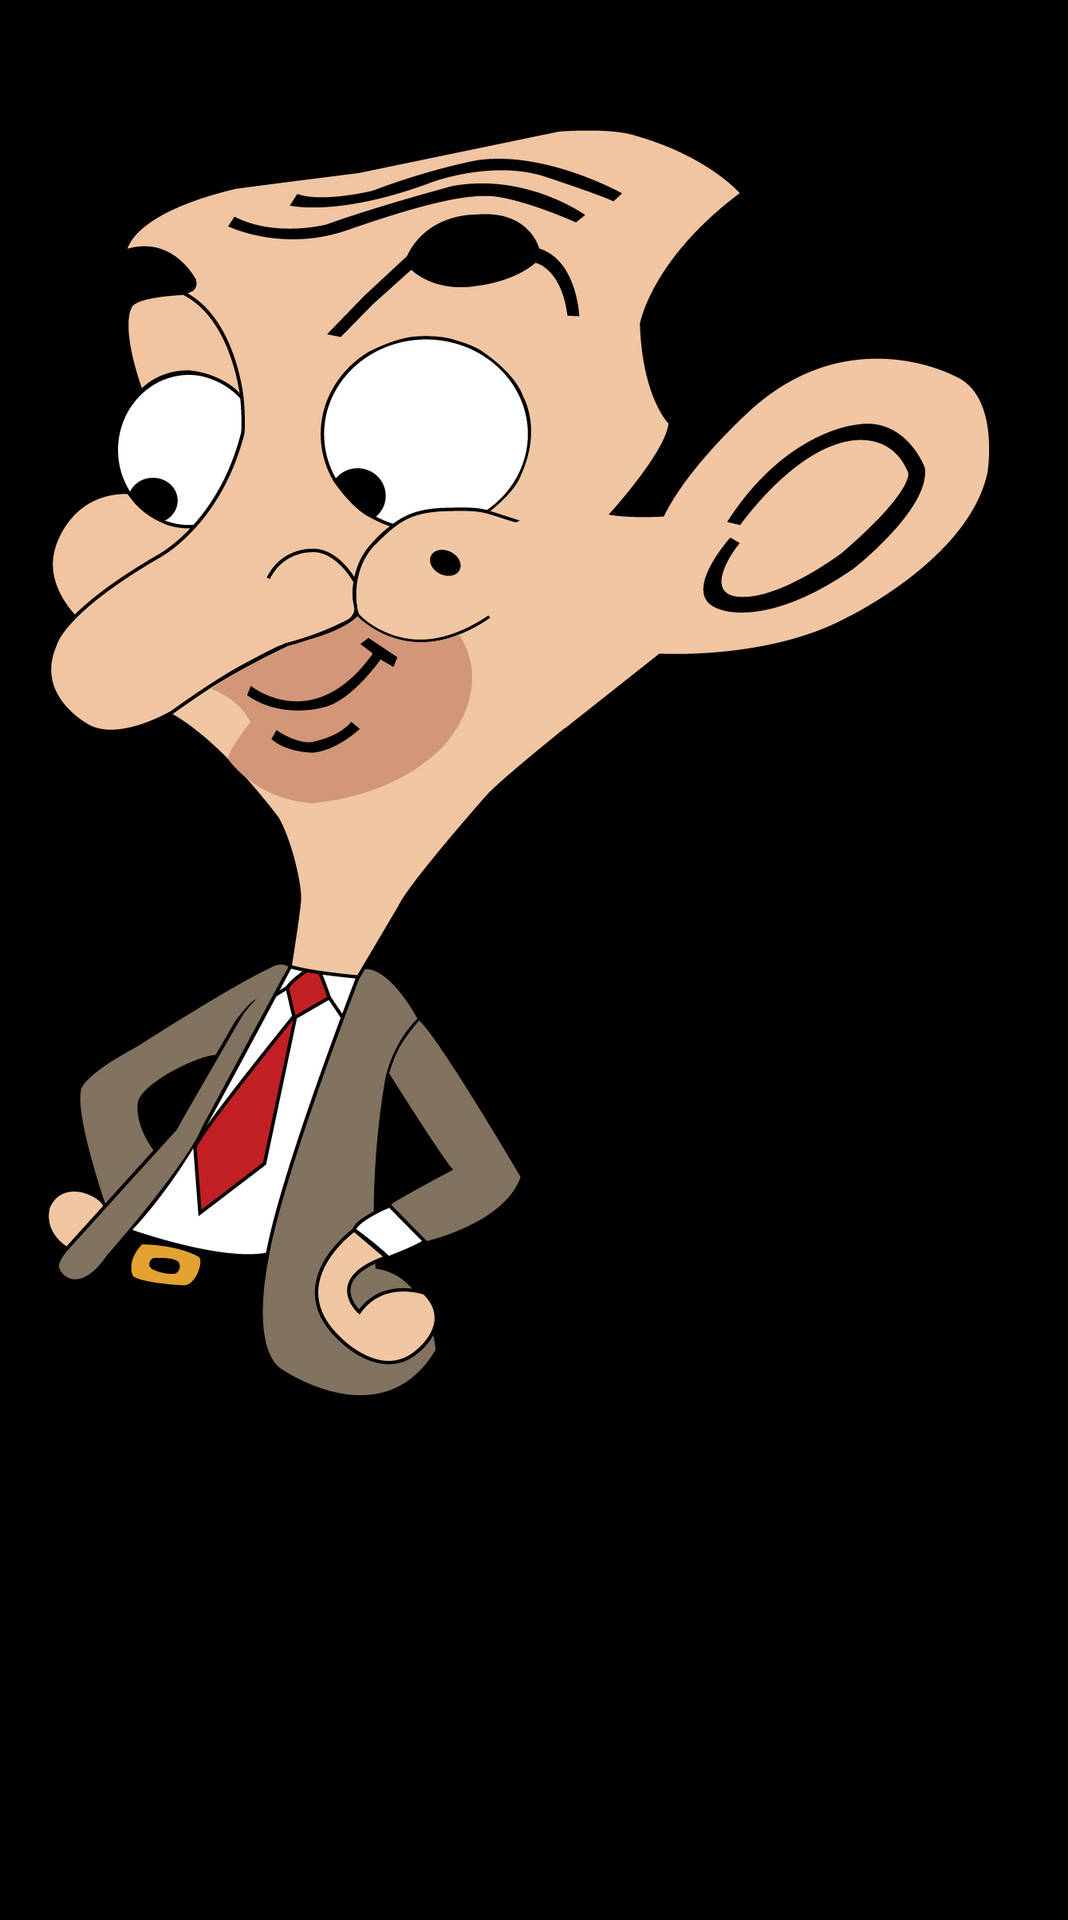 Mr. Bean Cartoon White Background Wallpaper